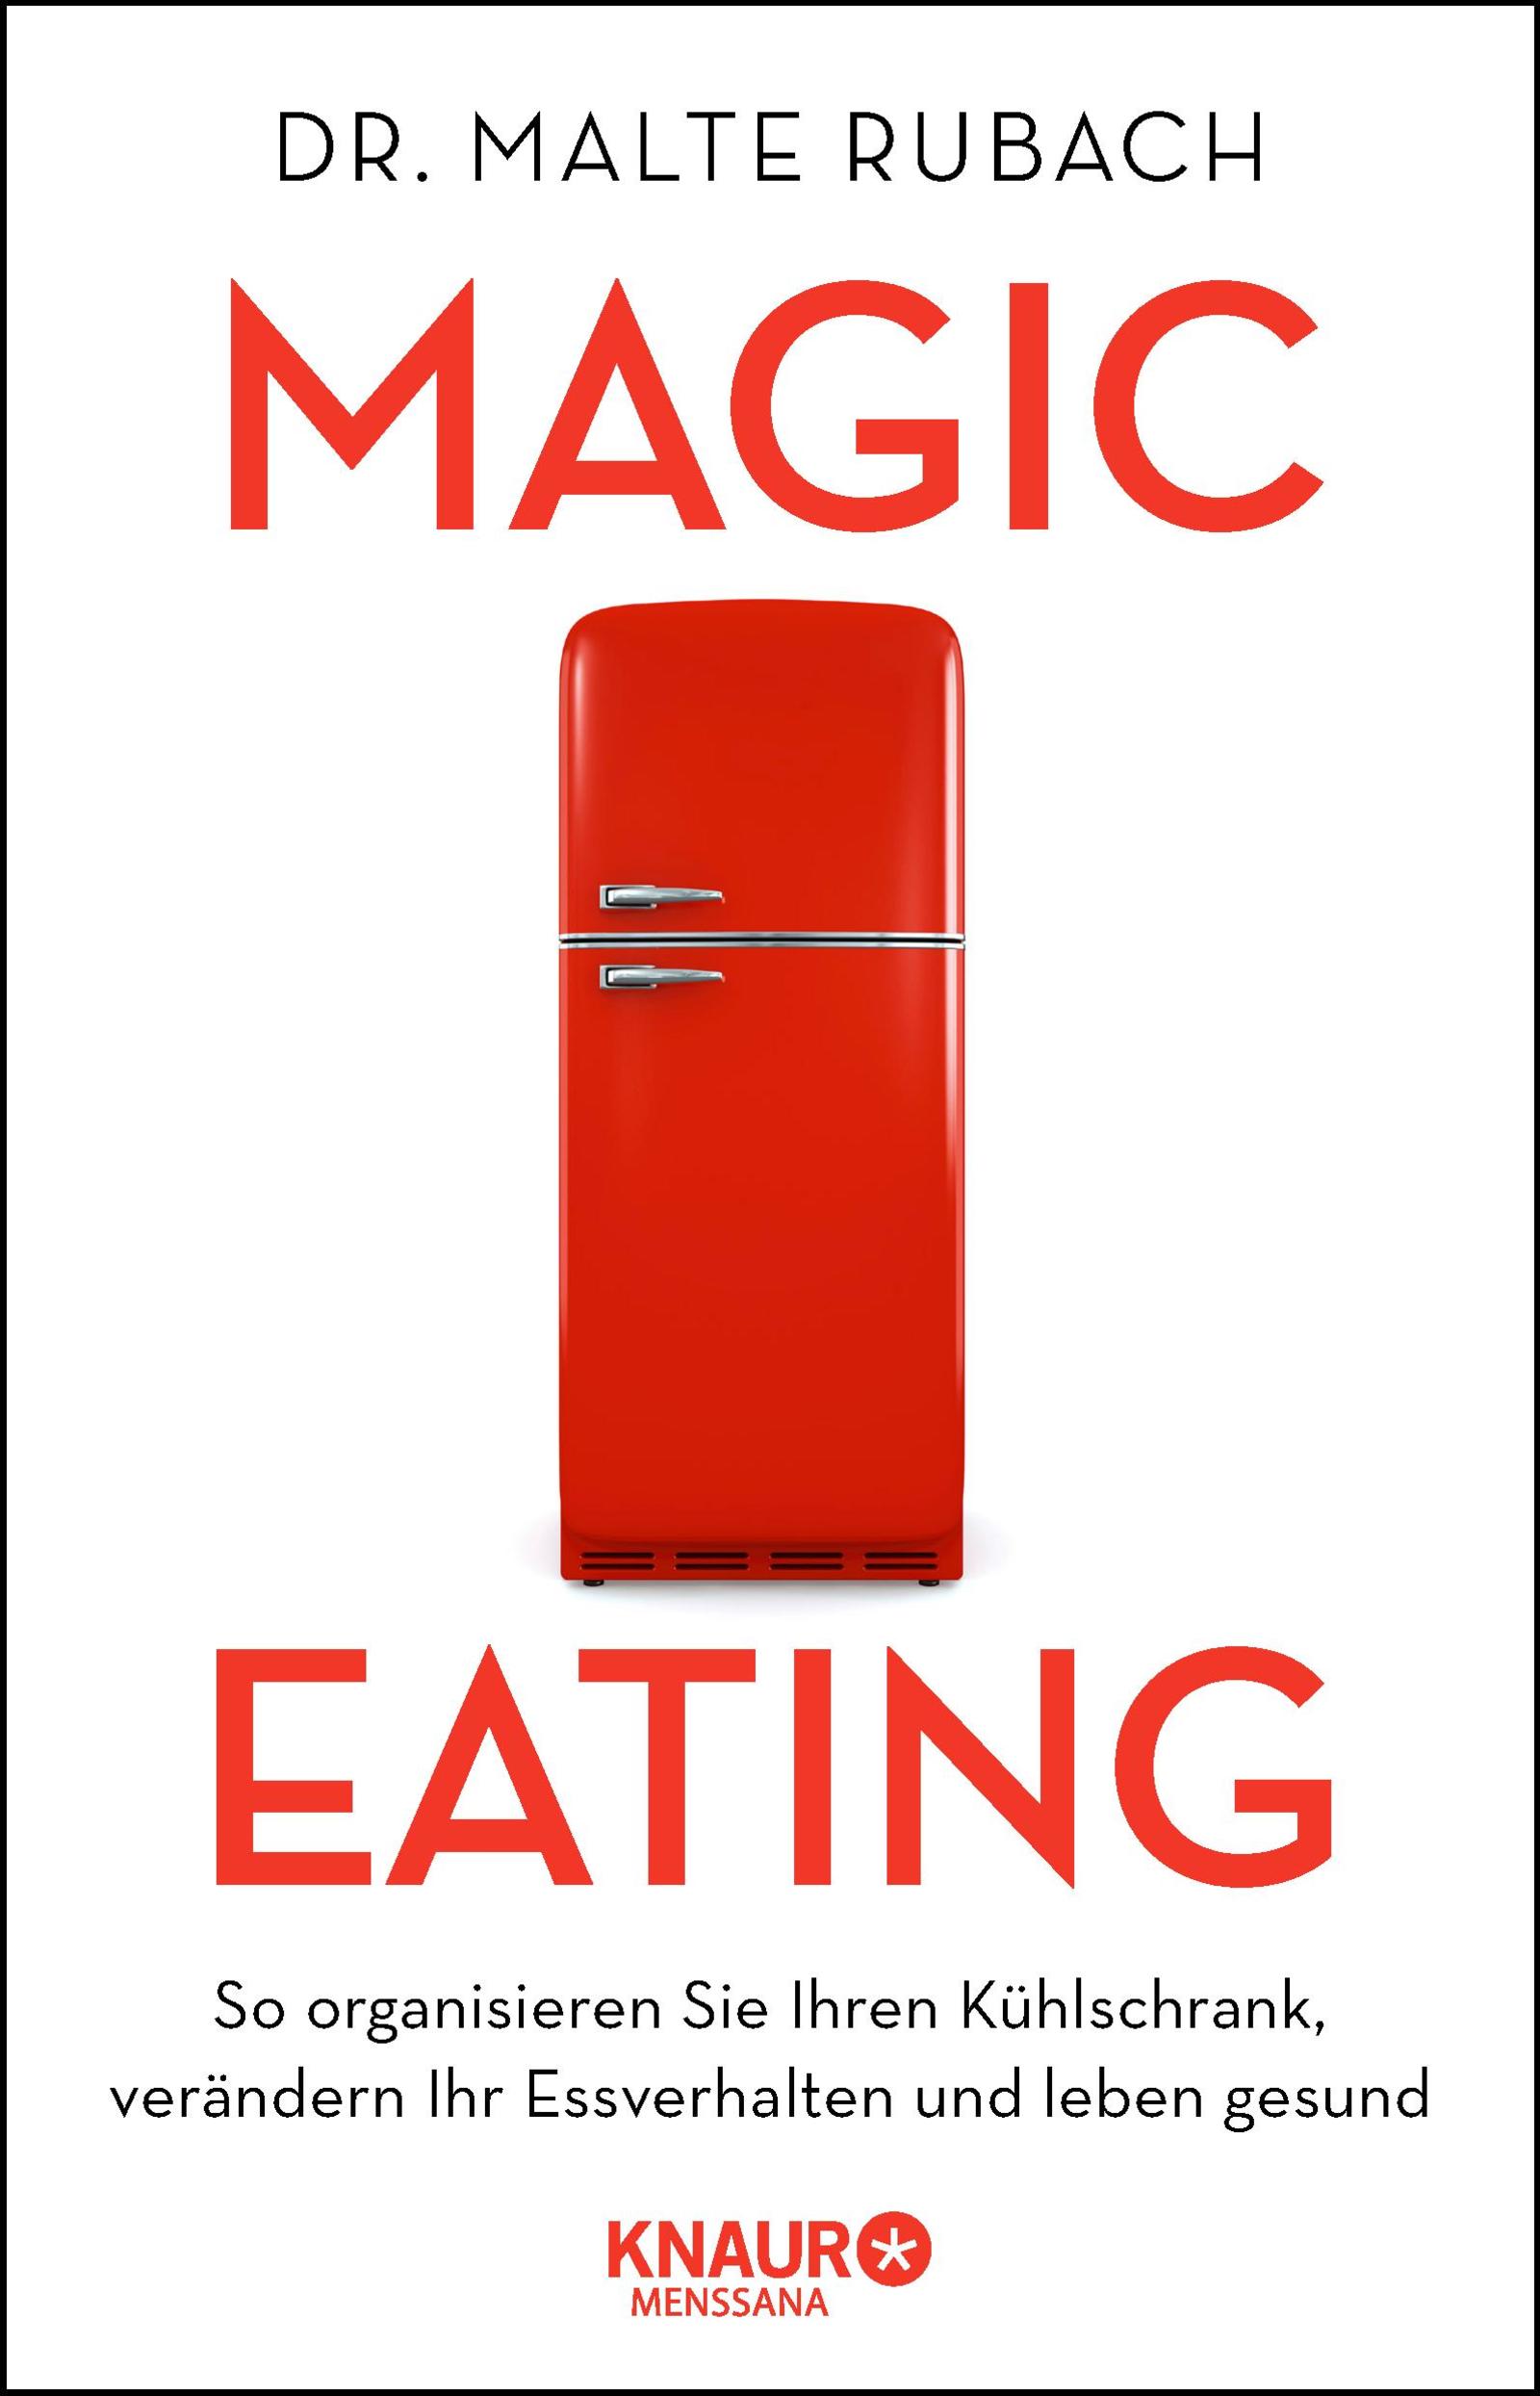 Magic Eating